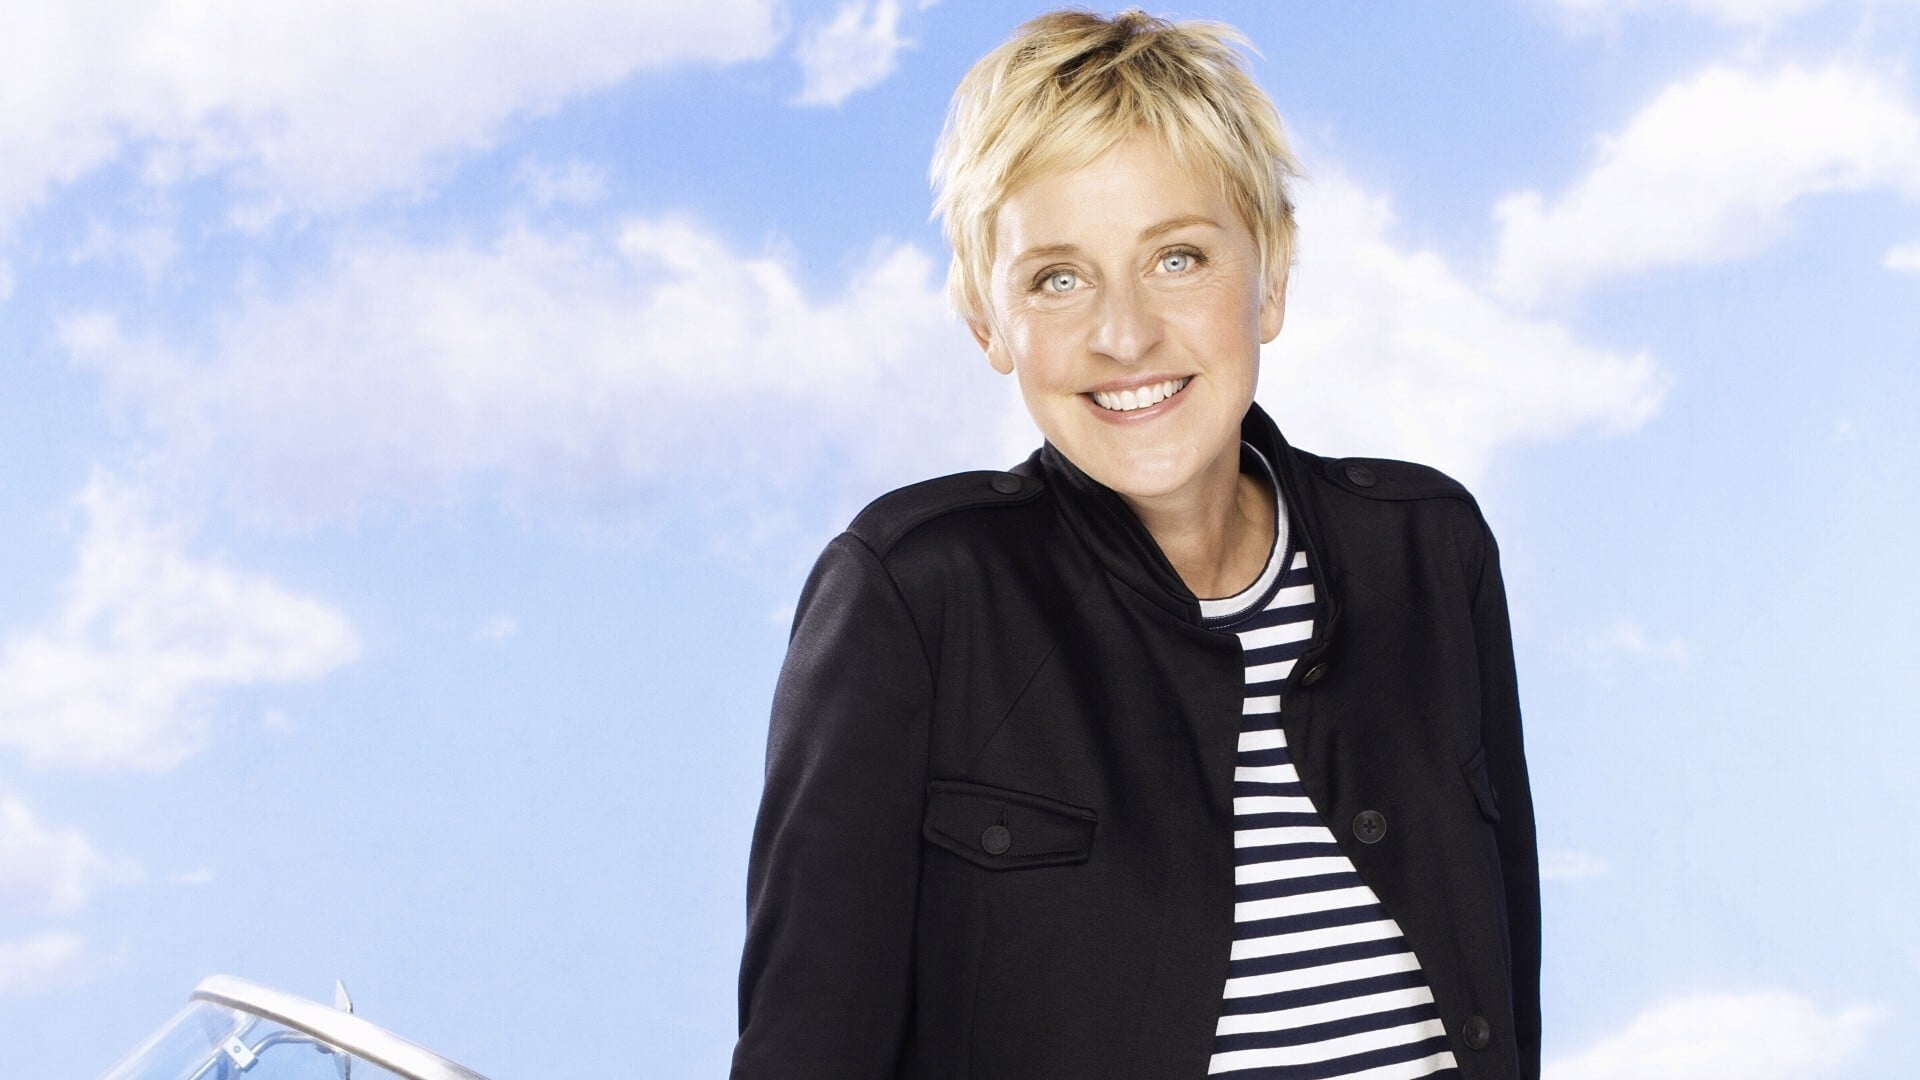 The Ellen DeGeneres Show - Season 19 Episode 56 : Day 6 of 12 Days of Giveaways with Wanda Sykes